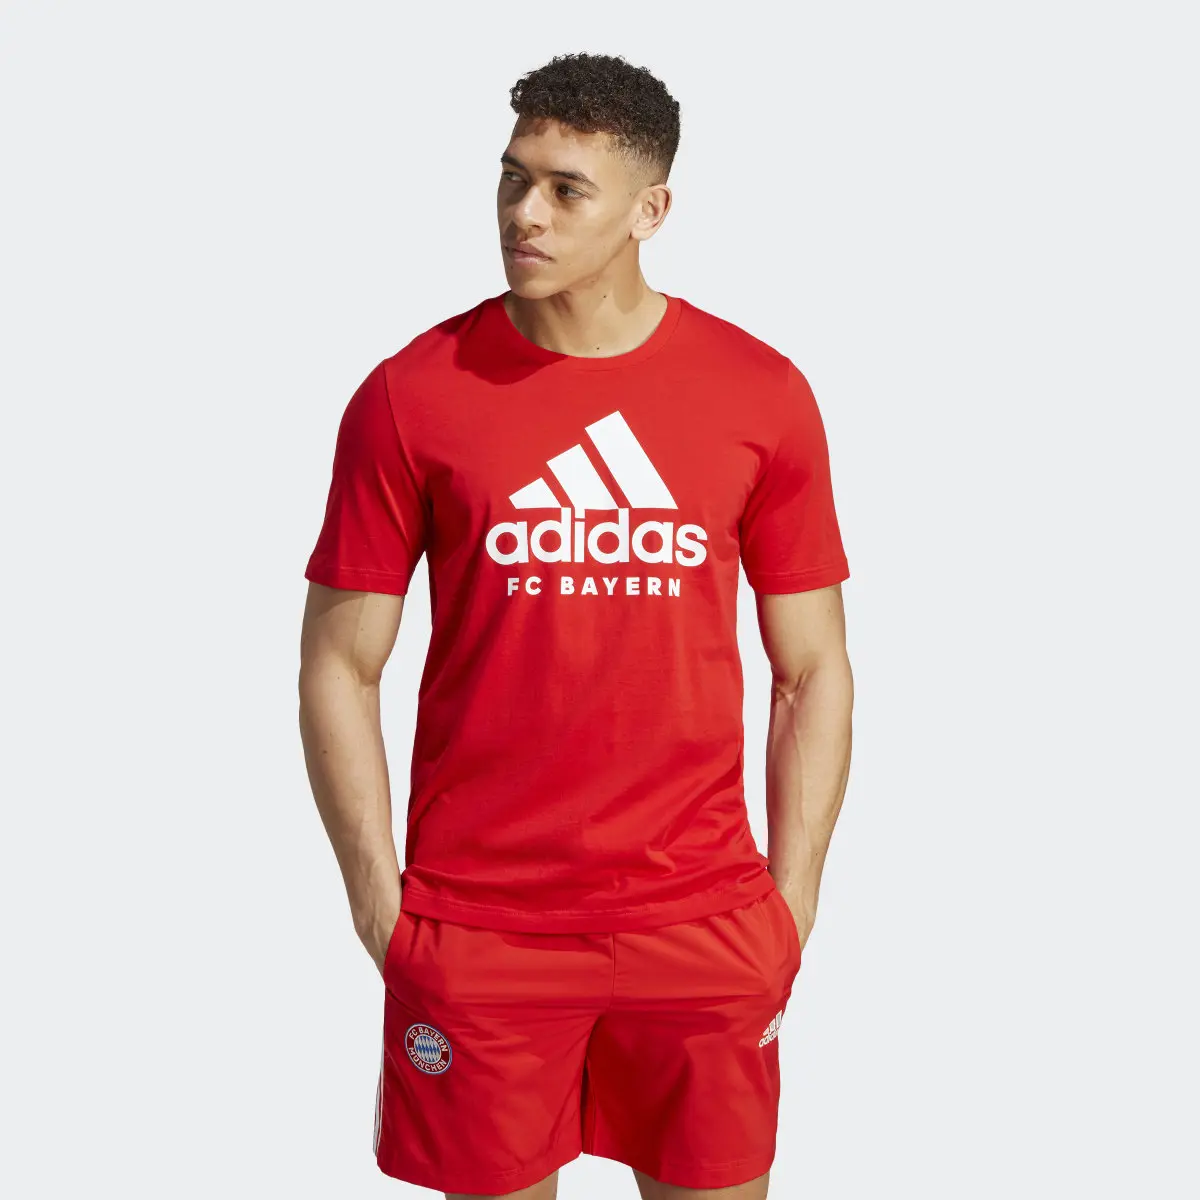 Adidas FC Bayern DNA Graphic T-Shirt. 2